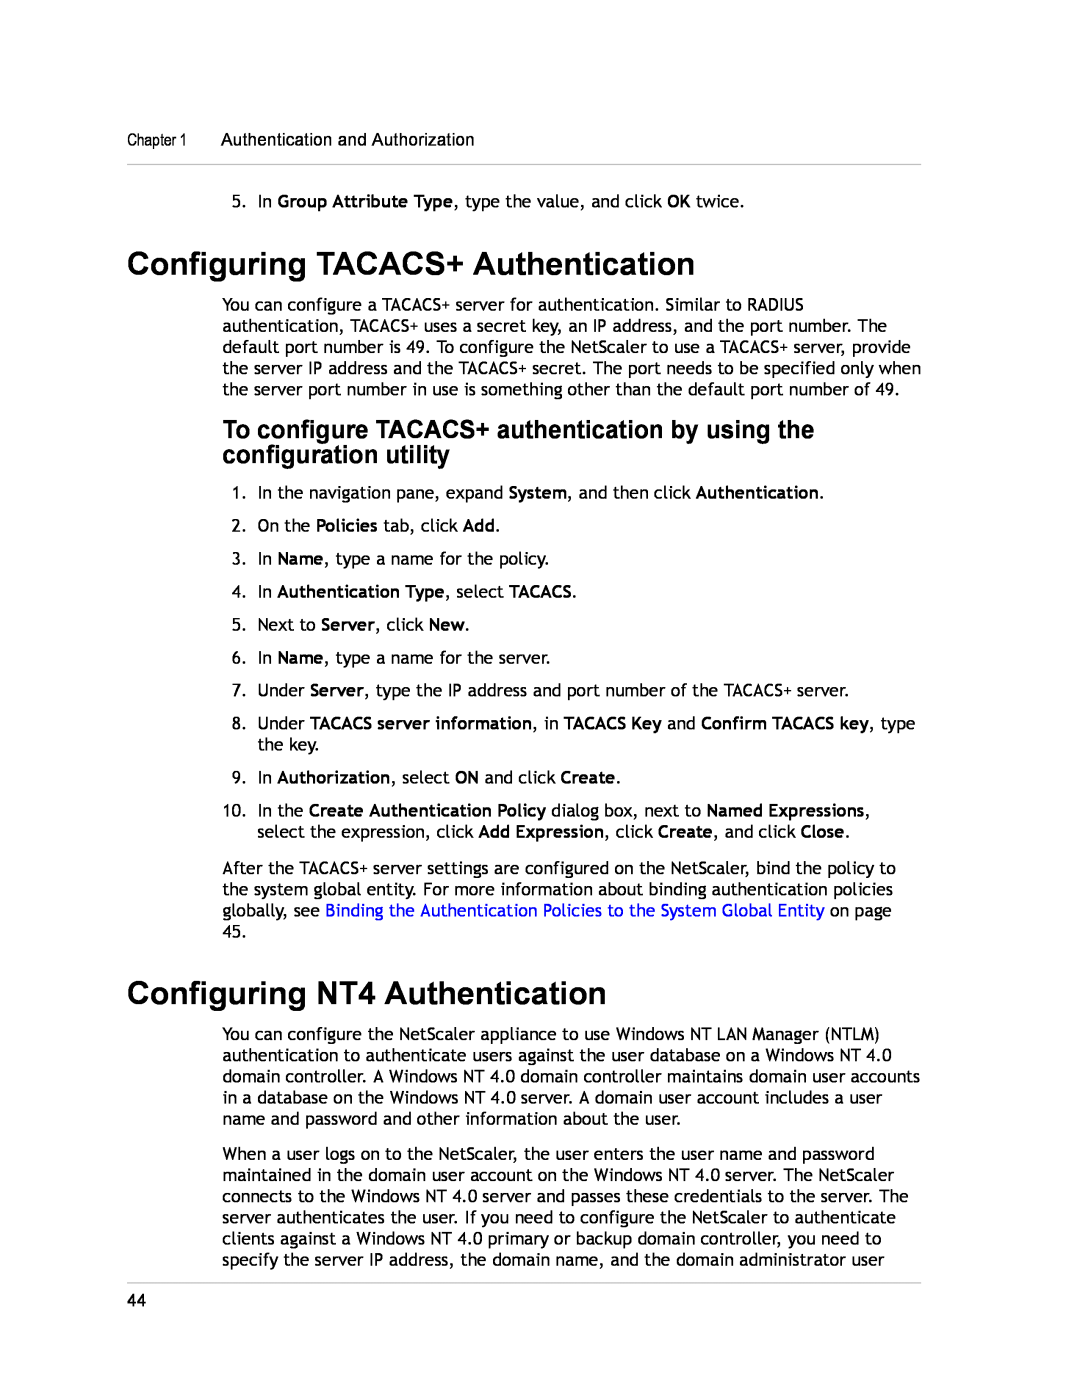 Citrix Systems CITRIX NETSCALER 9.3 manual Configuring TACACS+ Authentication, Configuring NT4 Authentication 